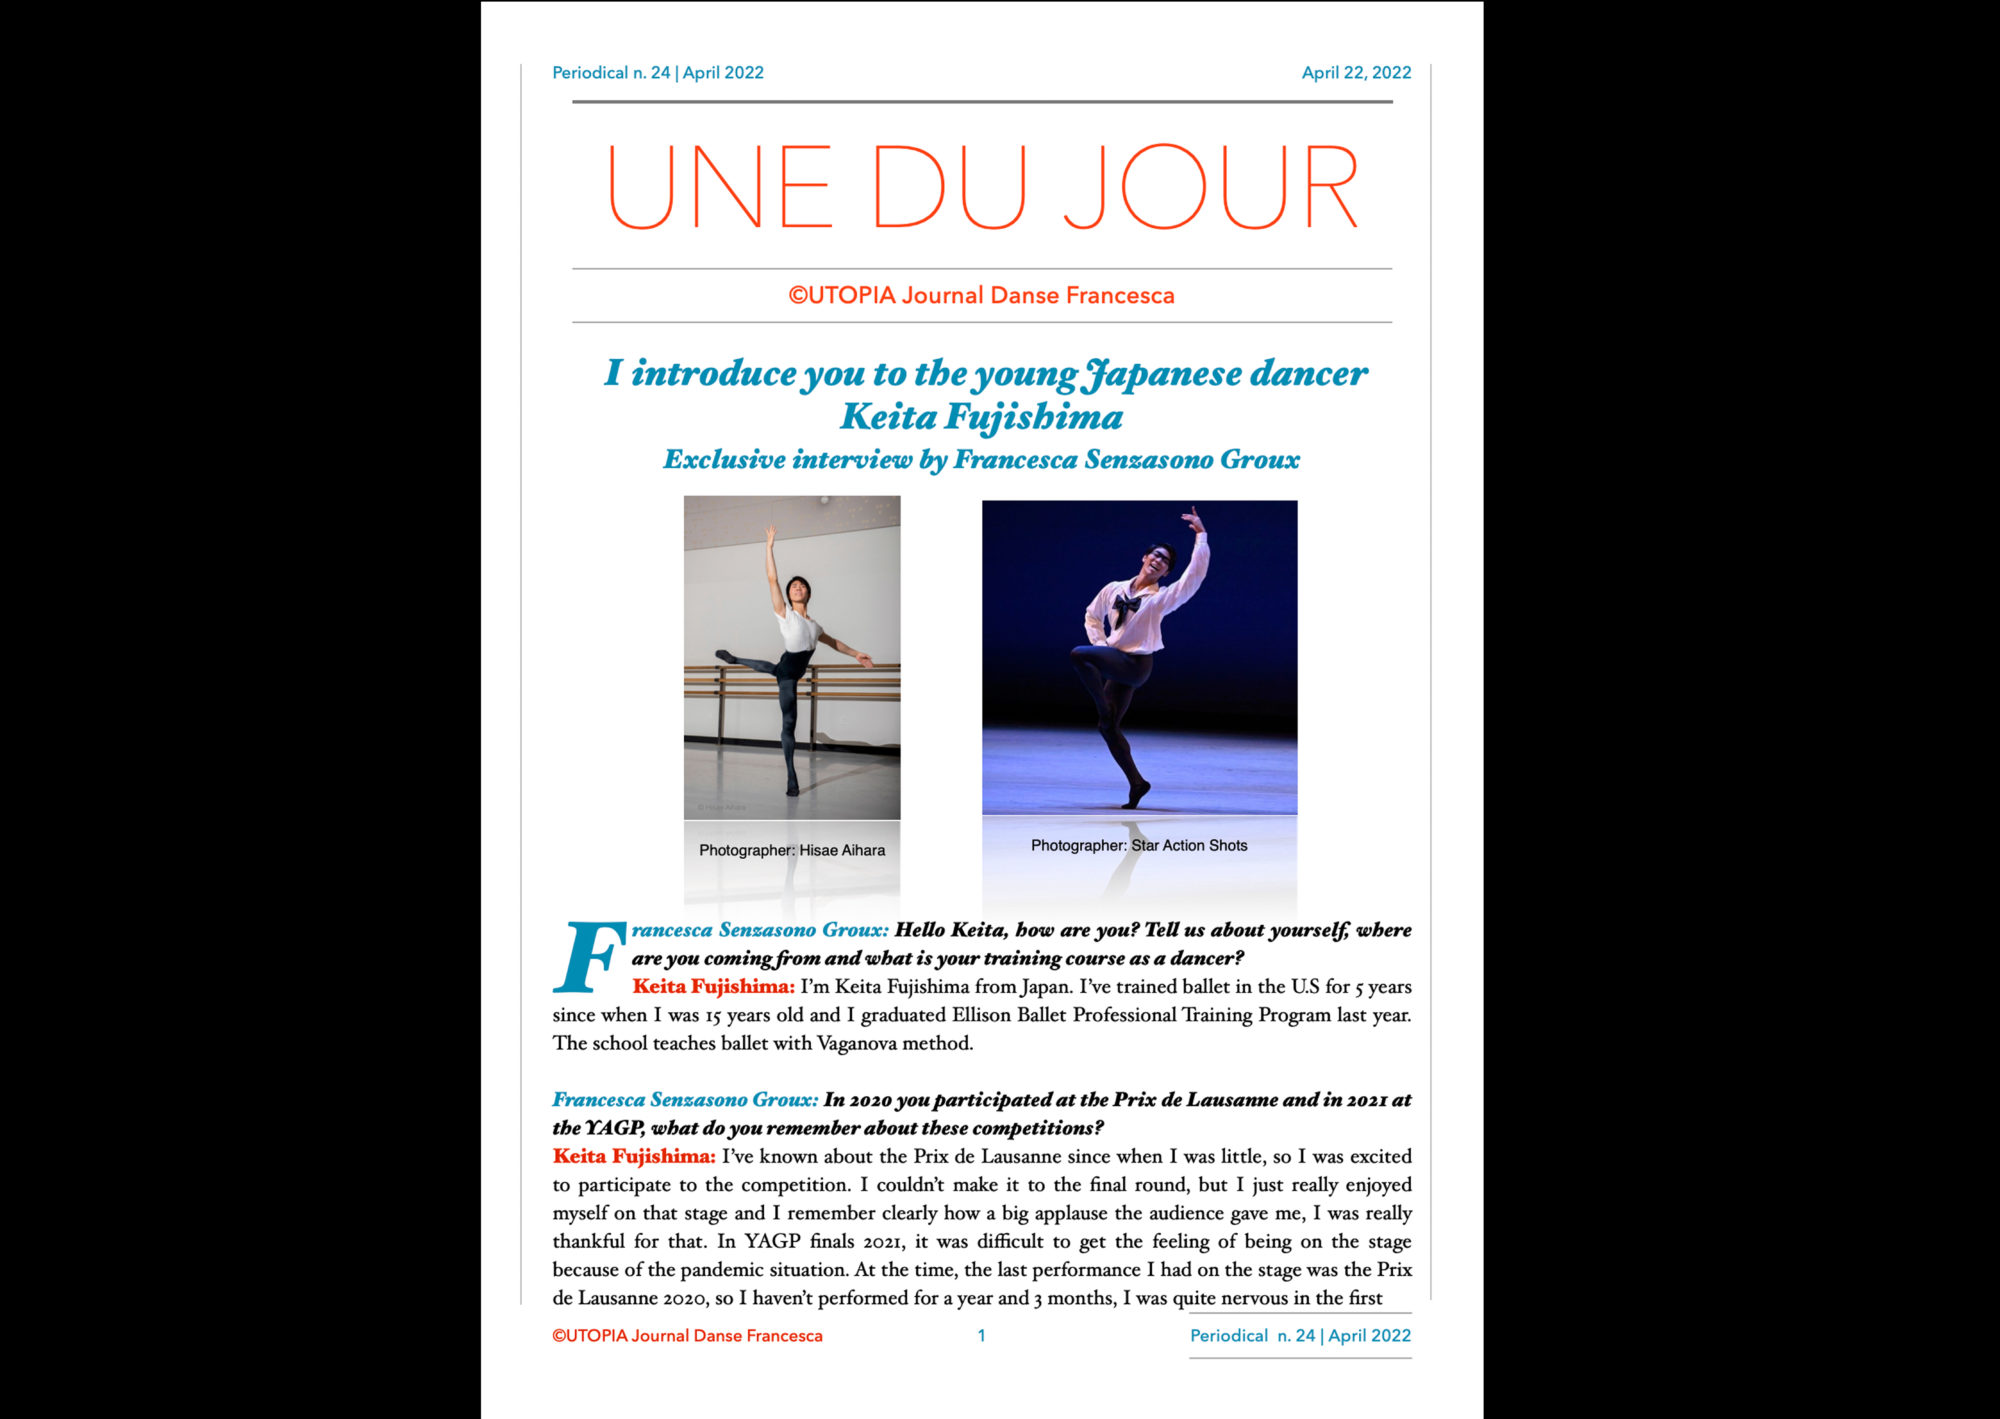 ©UTOPIA Journal Danse Francesca Periodical n.24 April 22, 2022 page 1